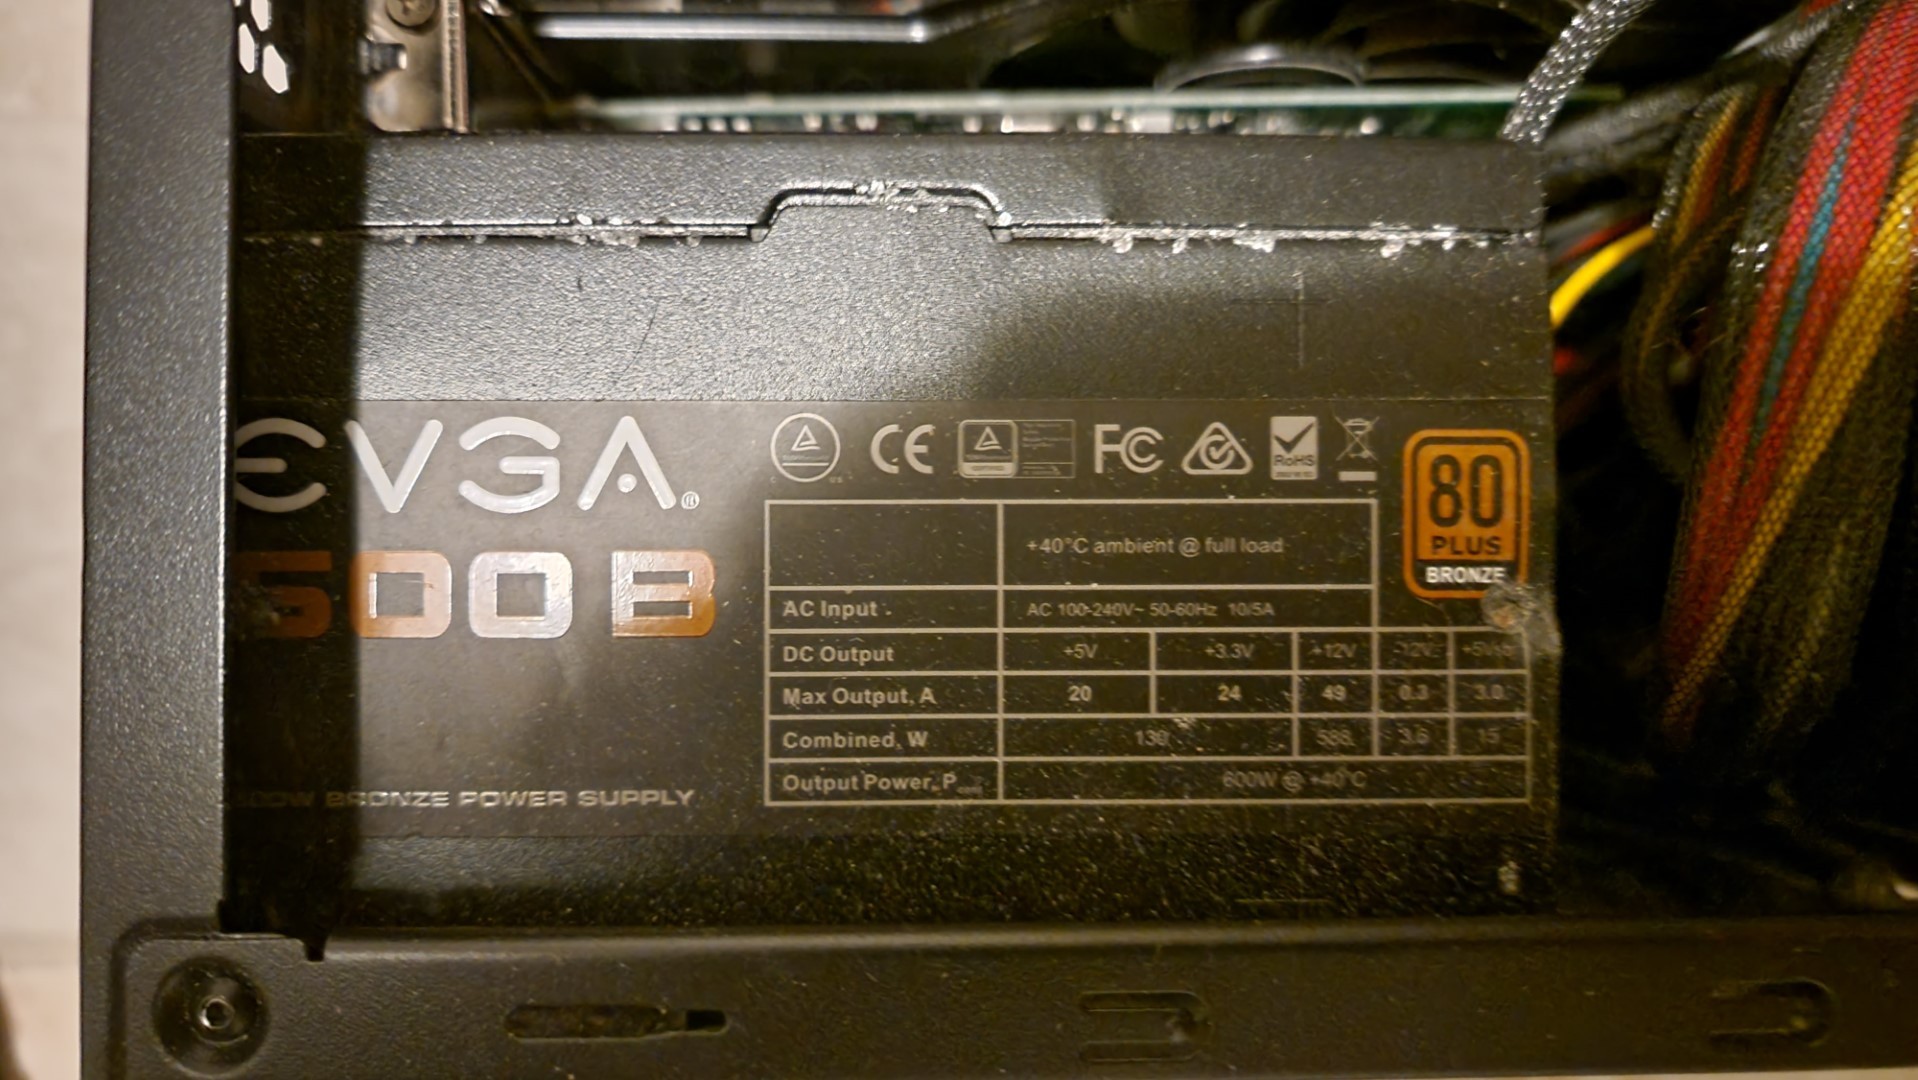 Bad EVGA 600B (600W) Power Supply.